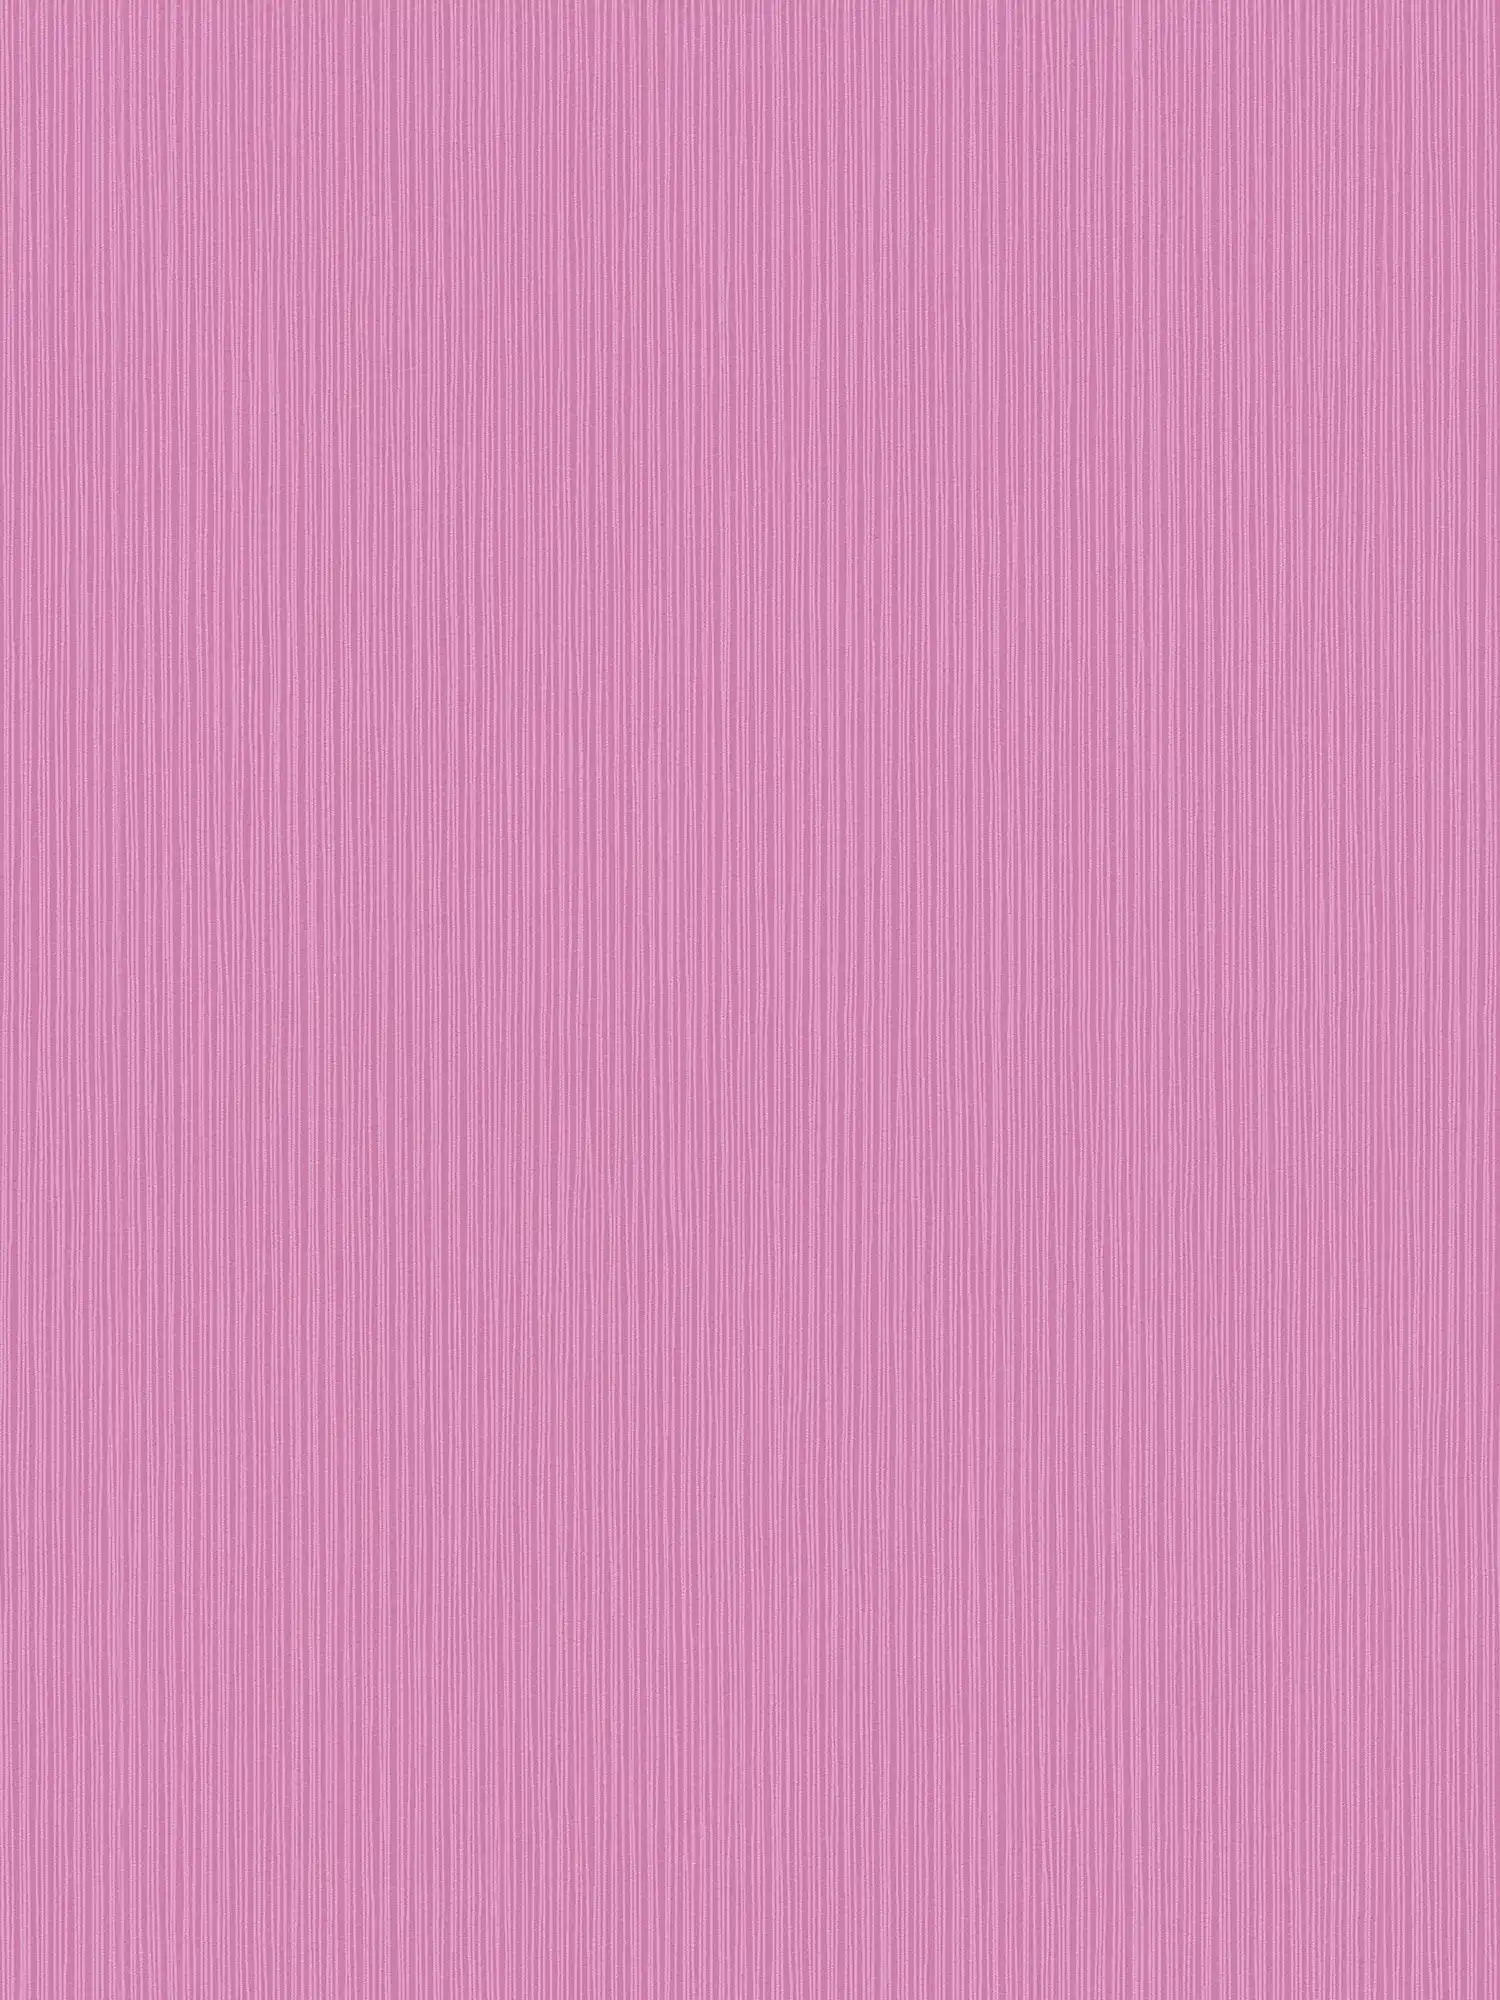 Wallpaper purple with line pattern & texture design
